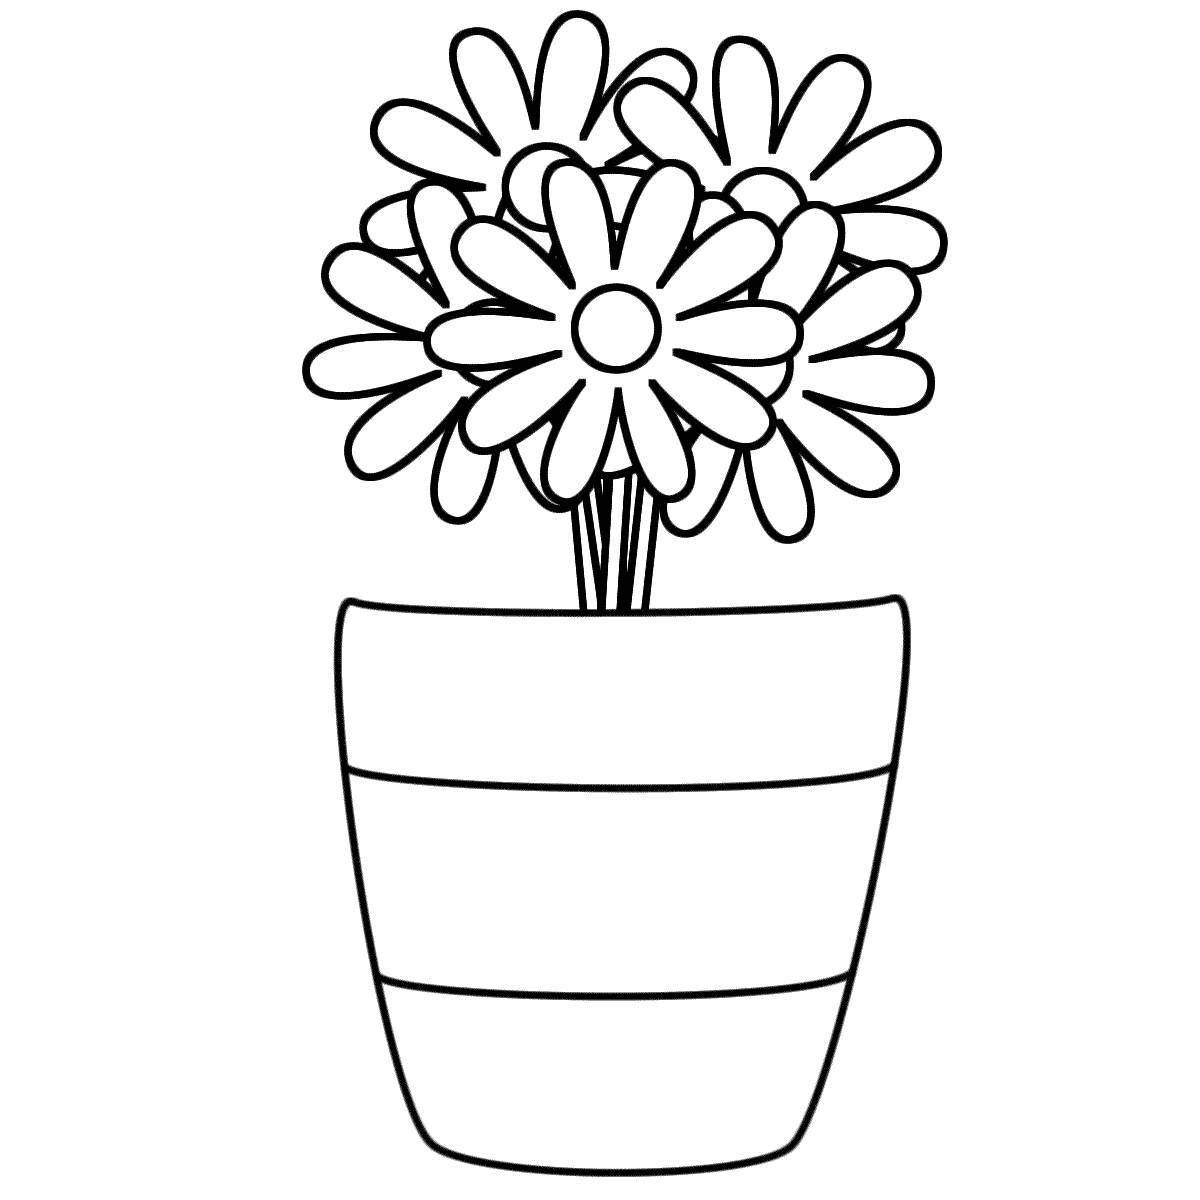 Adorable flower vase coloring book for kids